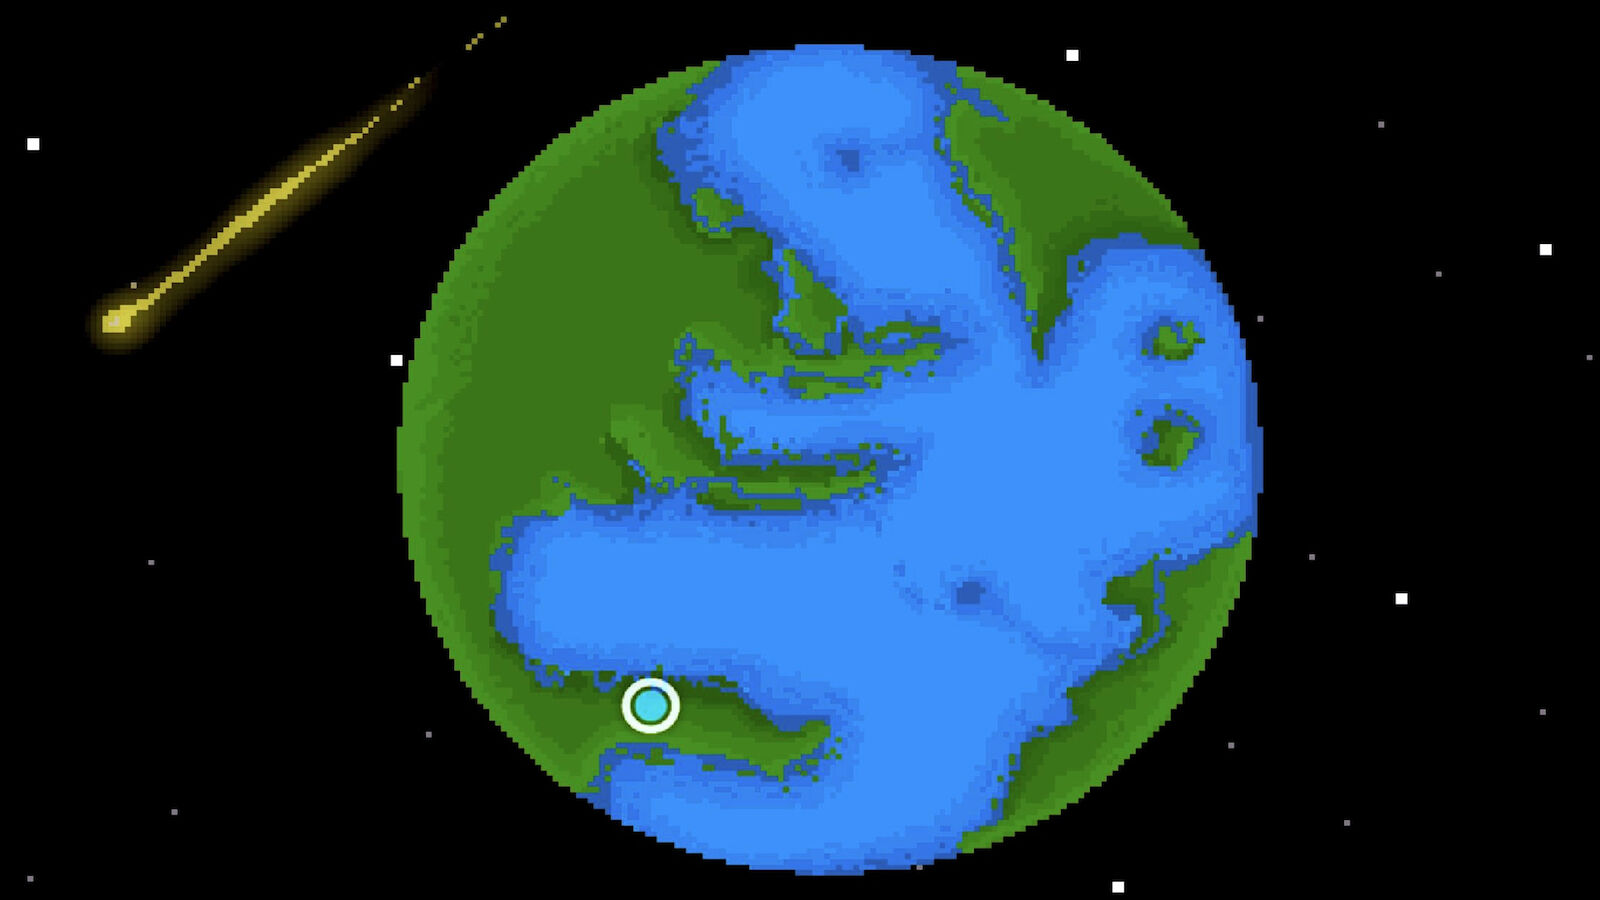 Star trek trexels 2 wiki